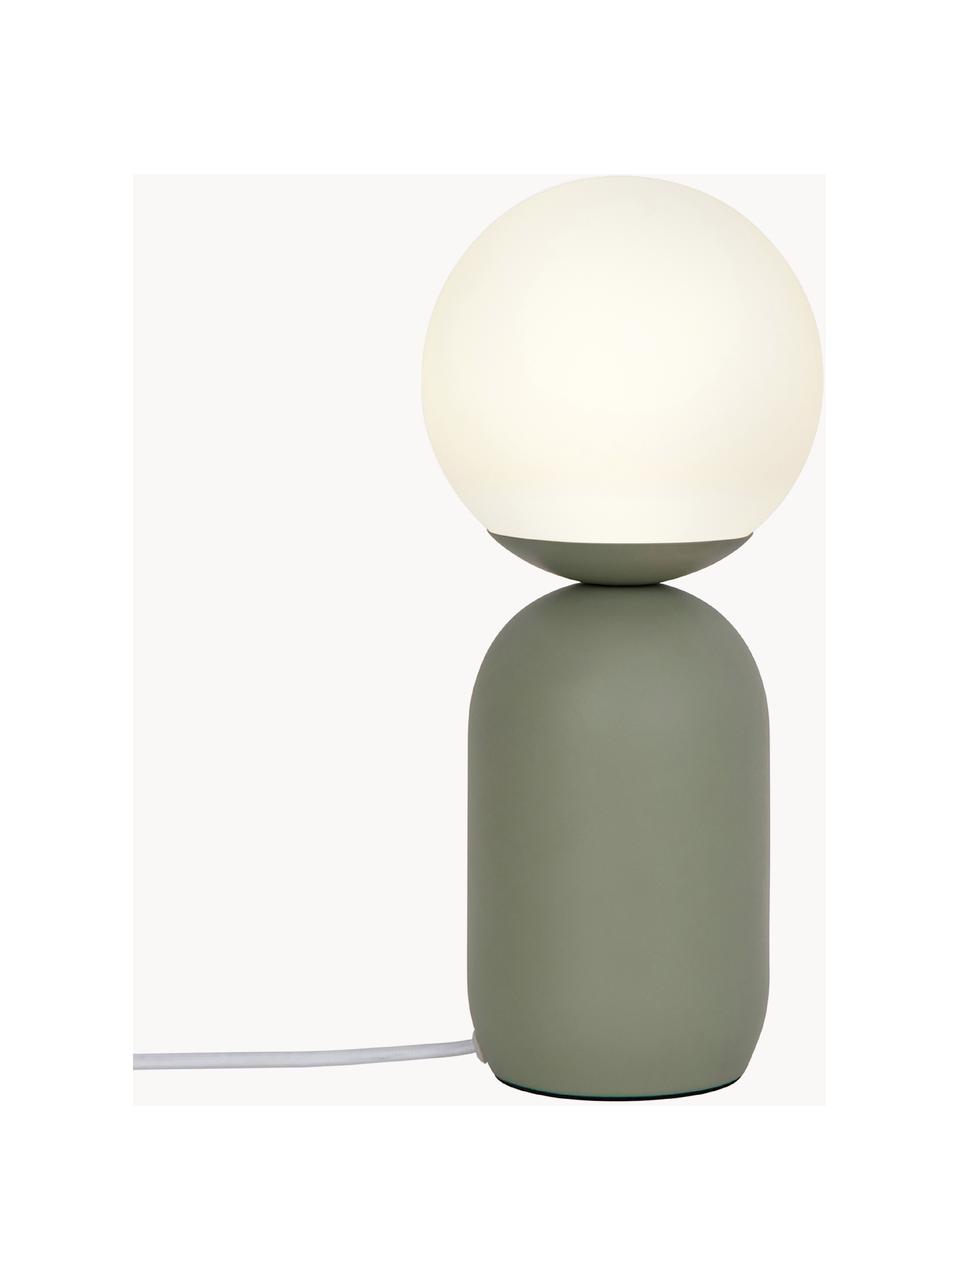 Petite lampe à poser Notti, Blanc, vert olive, Ø 15 x haut. 35 cm